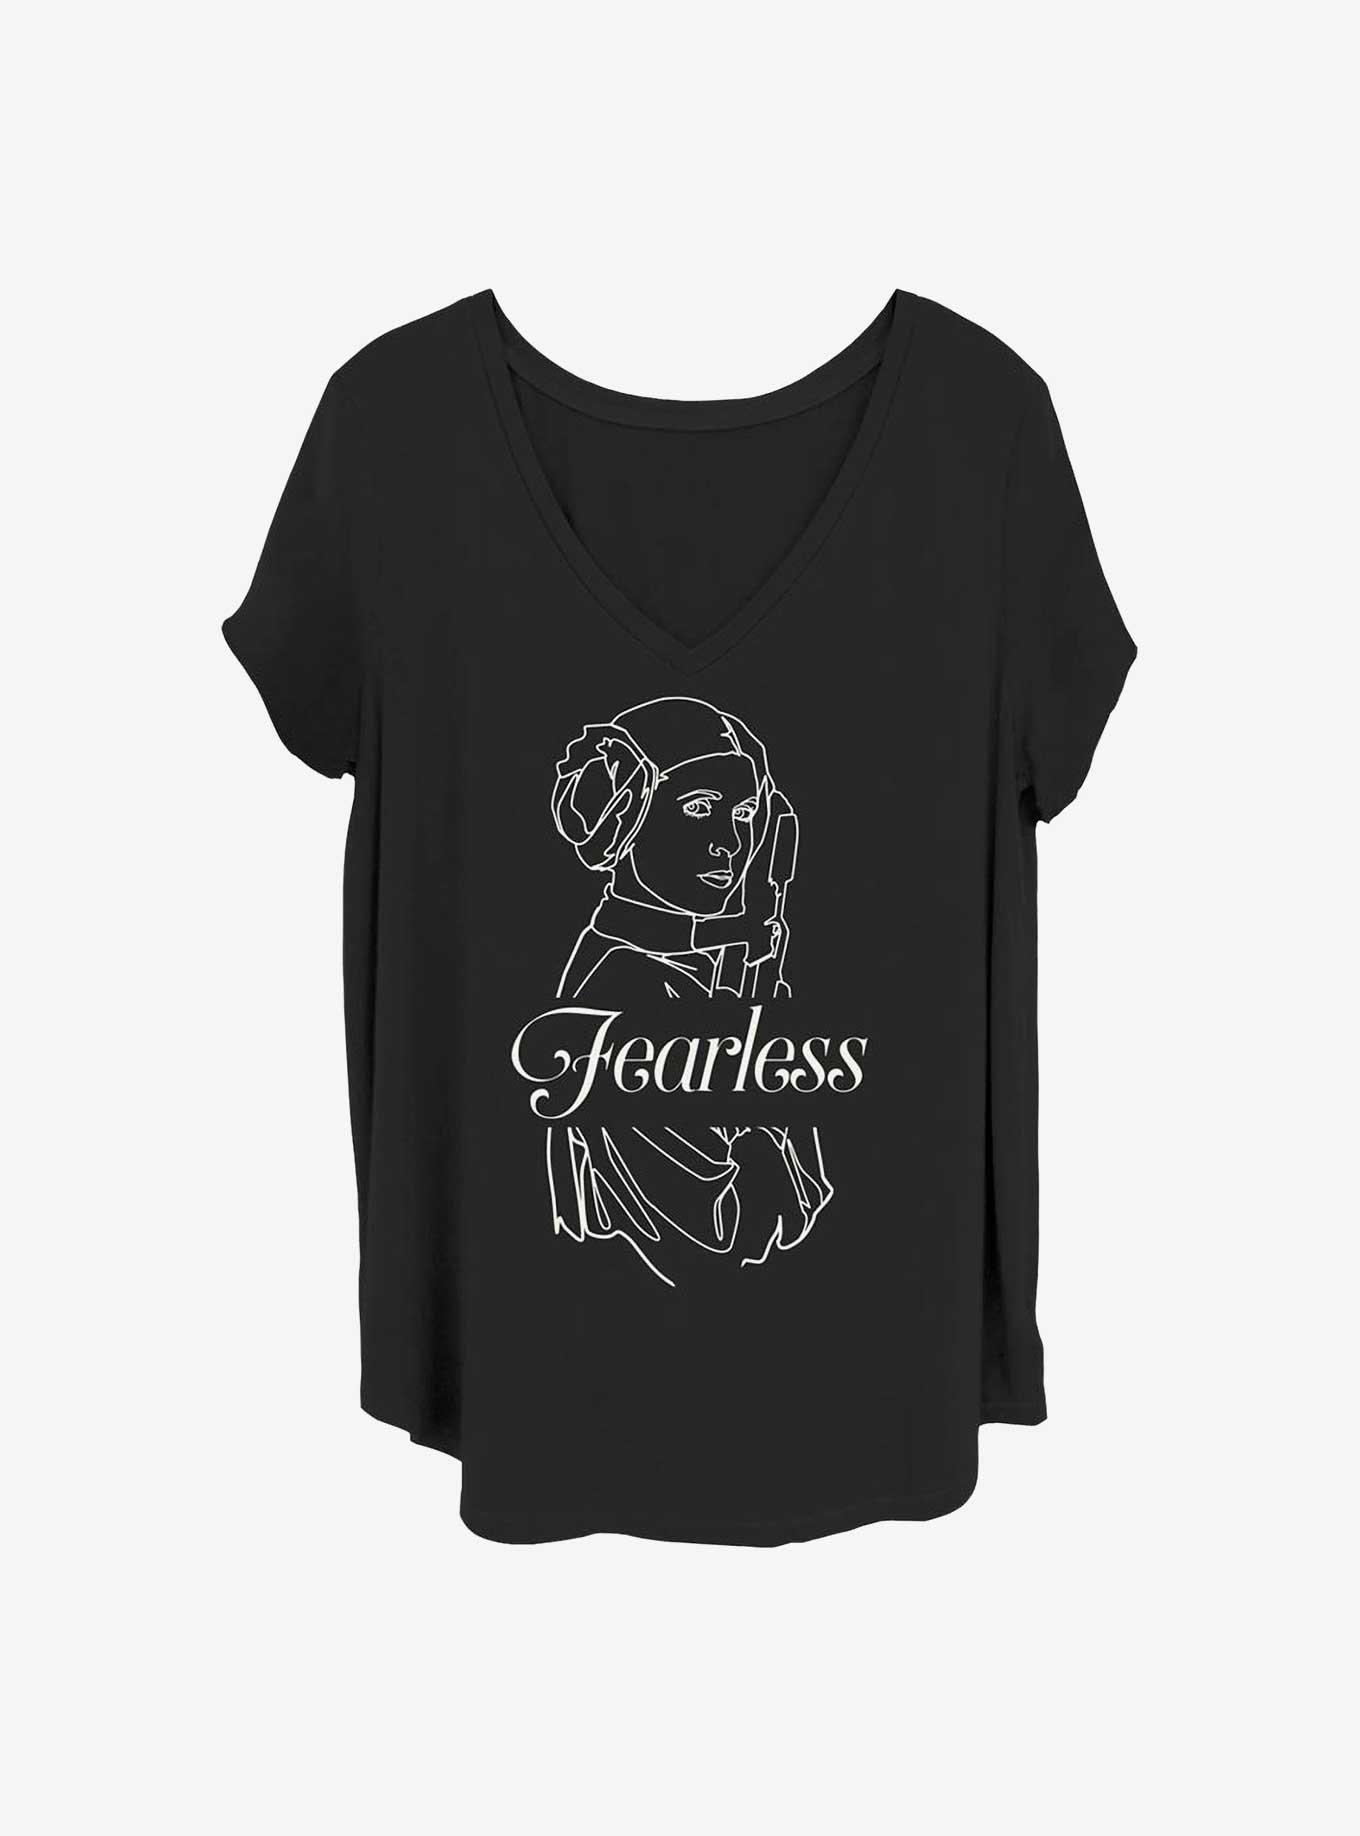 Star Wars Fearless Leia Girls T-Shirt Plus